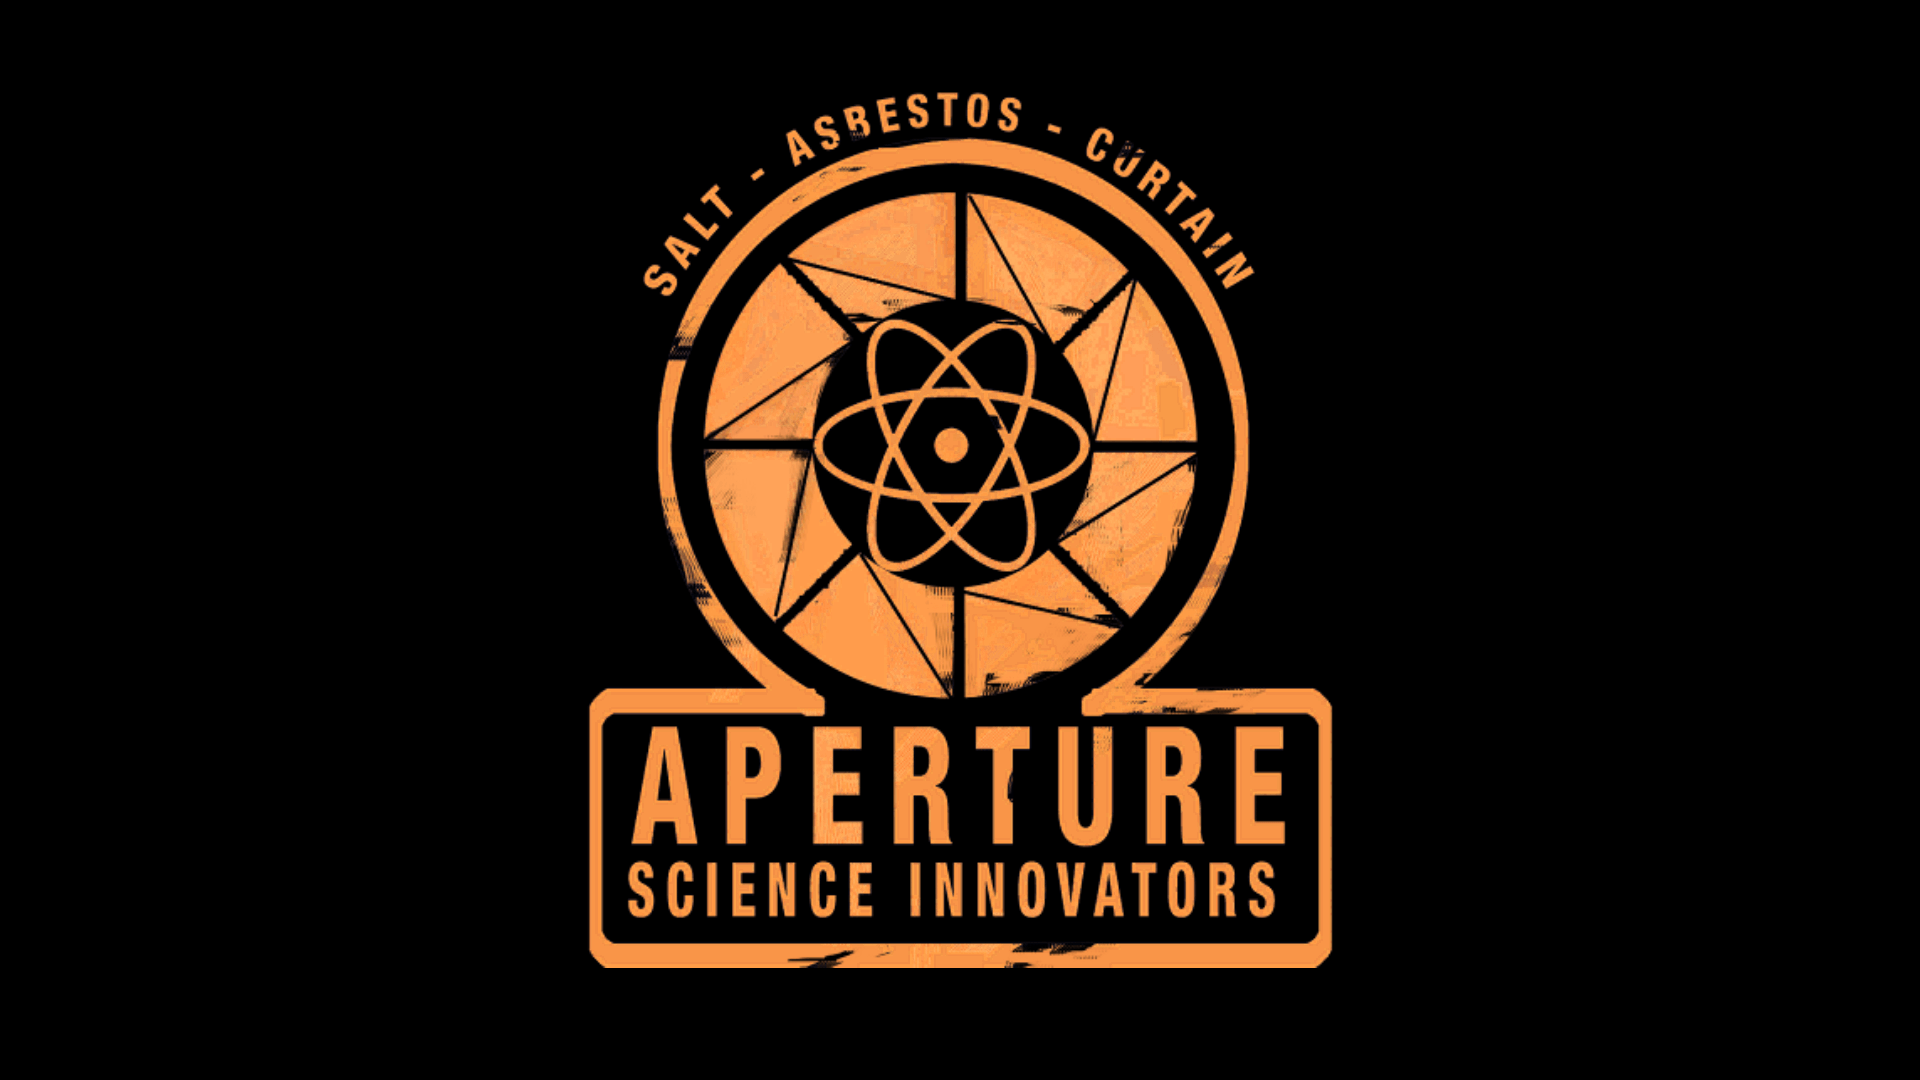 Portal 2 Aperture Laboratories Wallpapers 1920x1080 px Free.